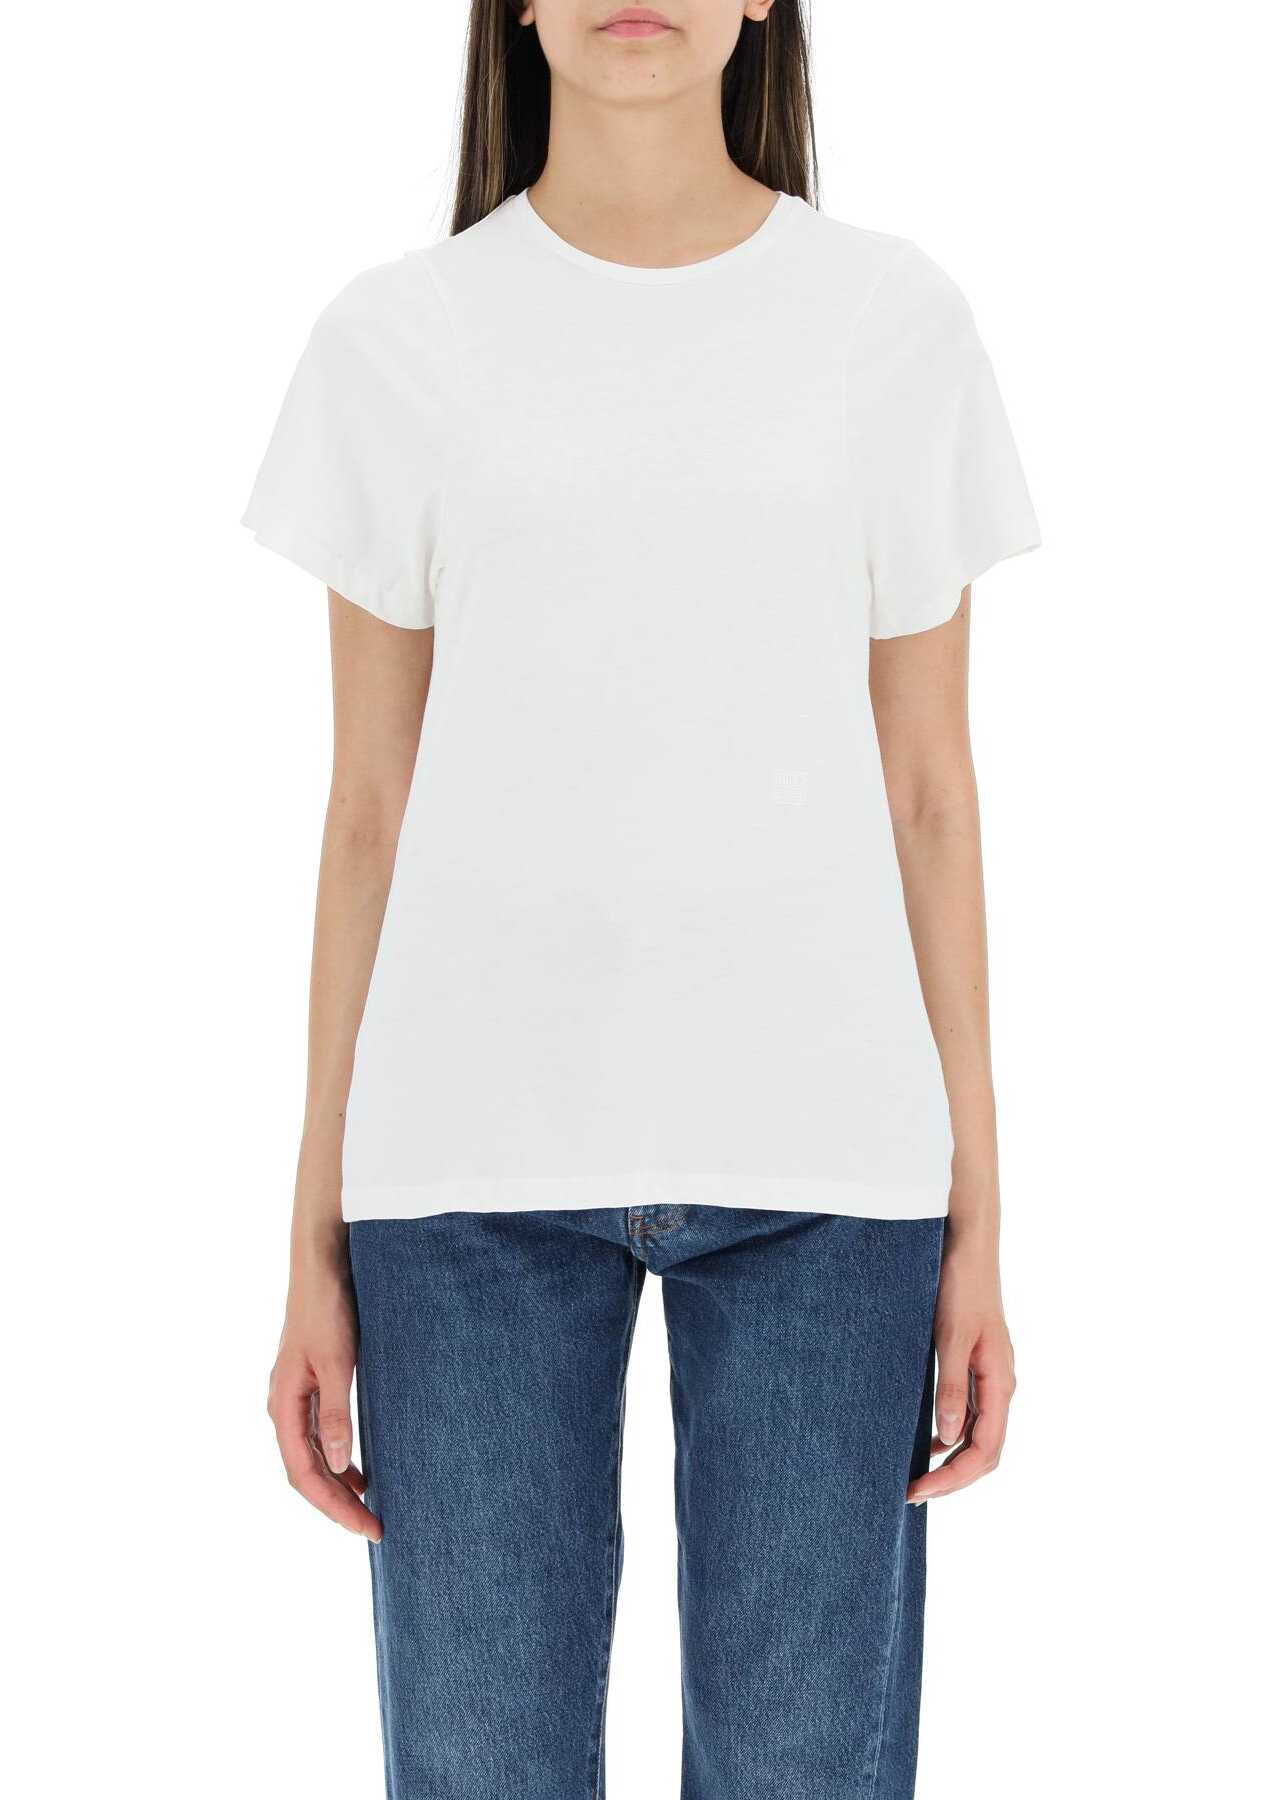 TOTÊME Curved Seam T-Shirt OFF WHITE